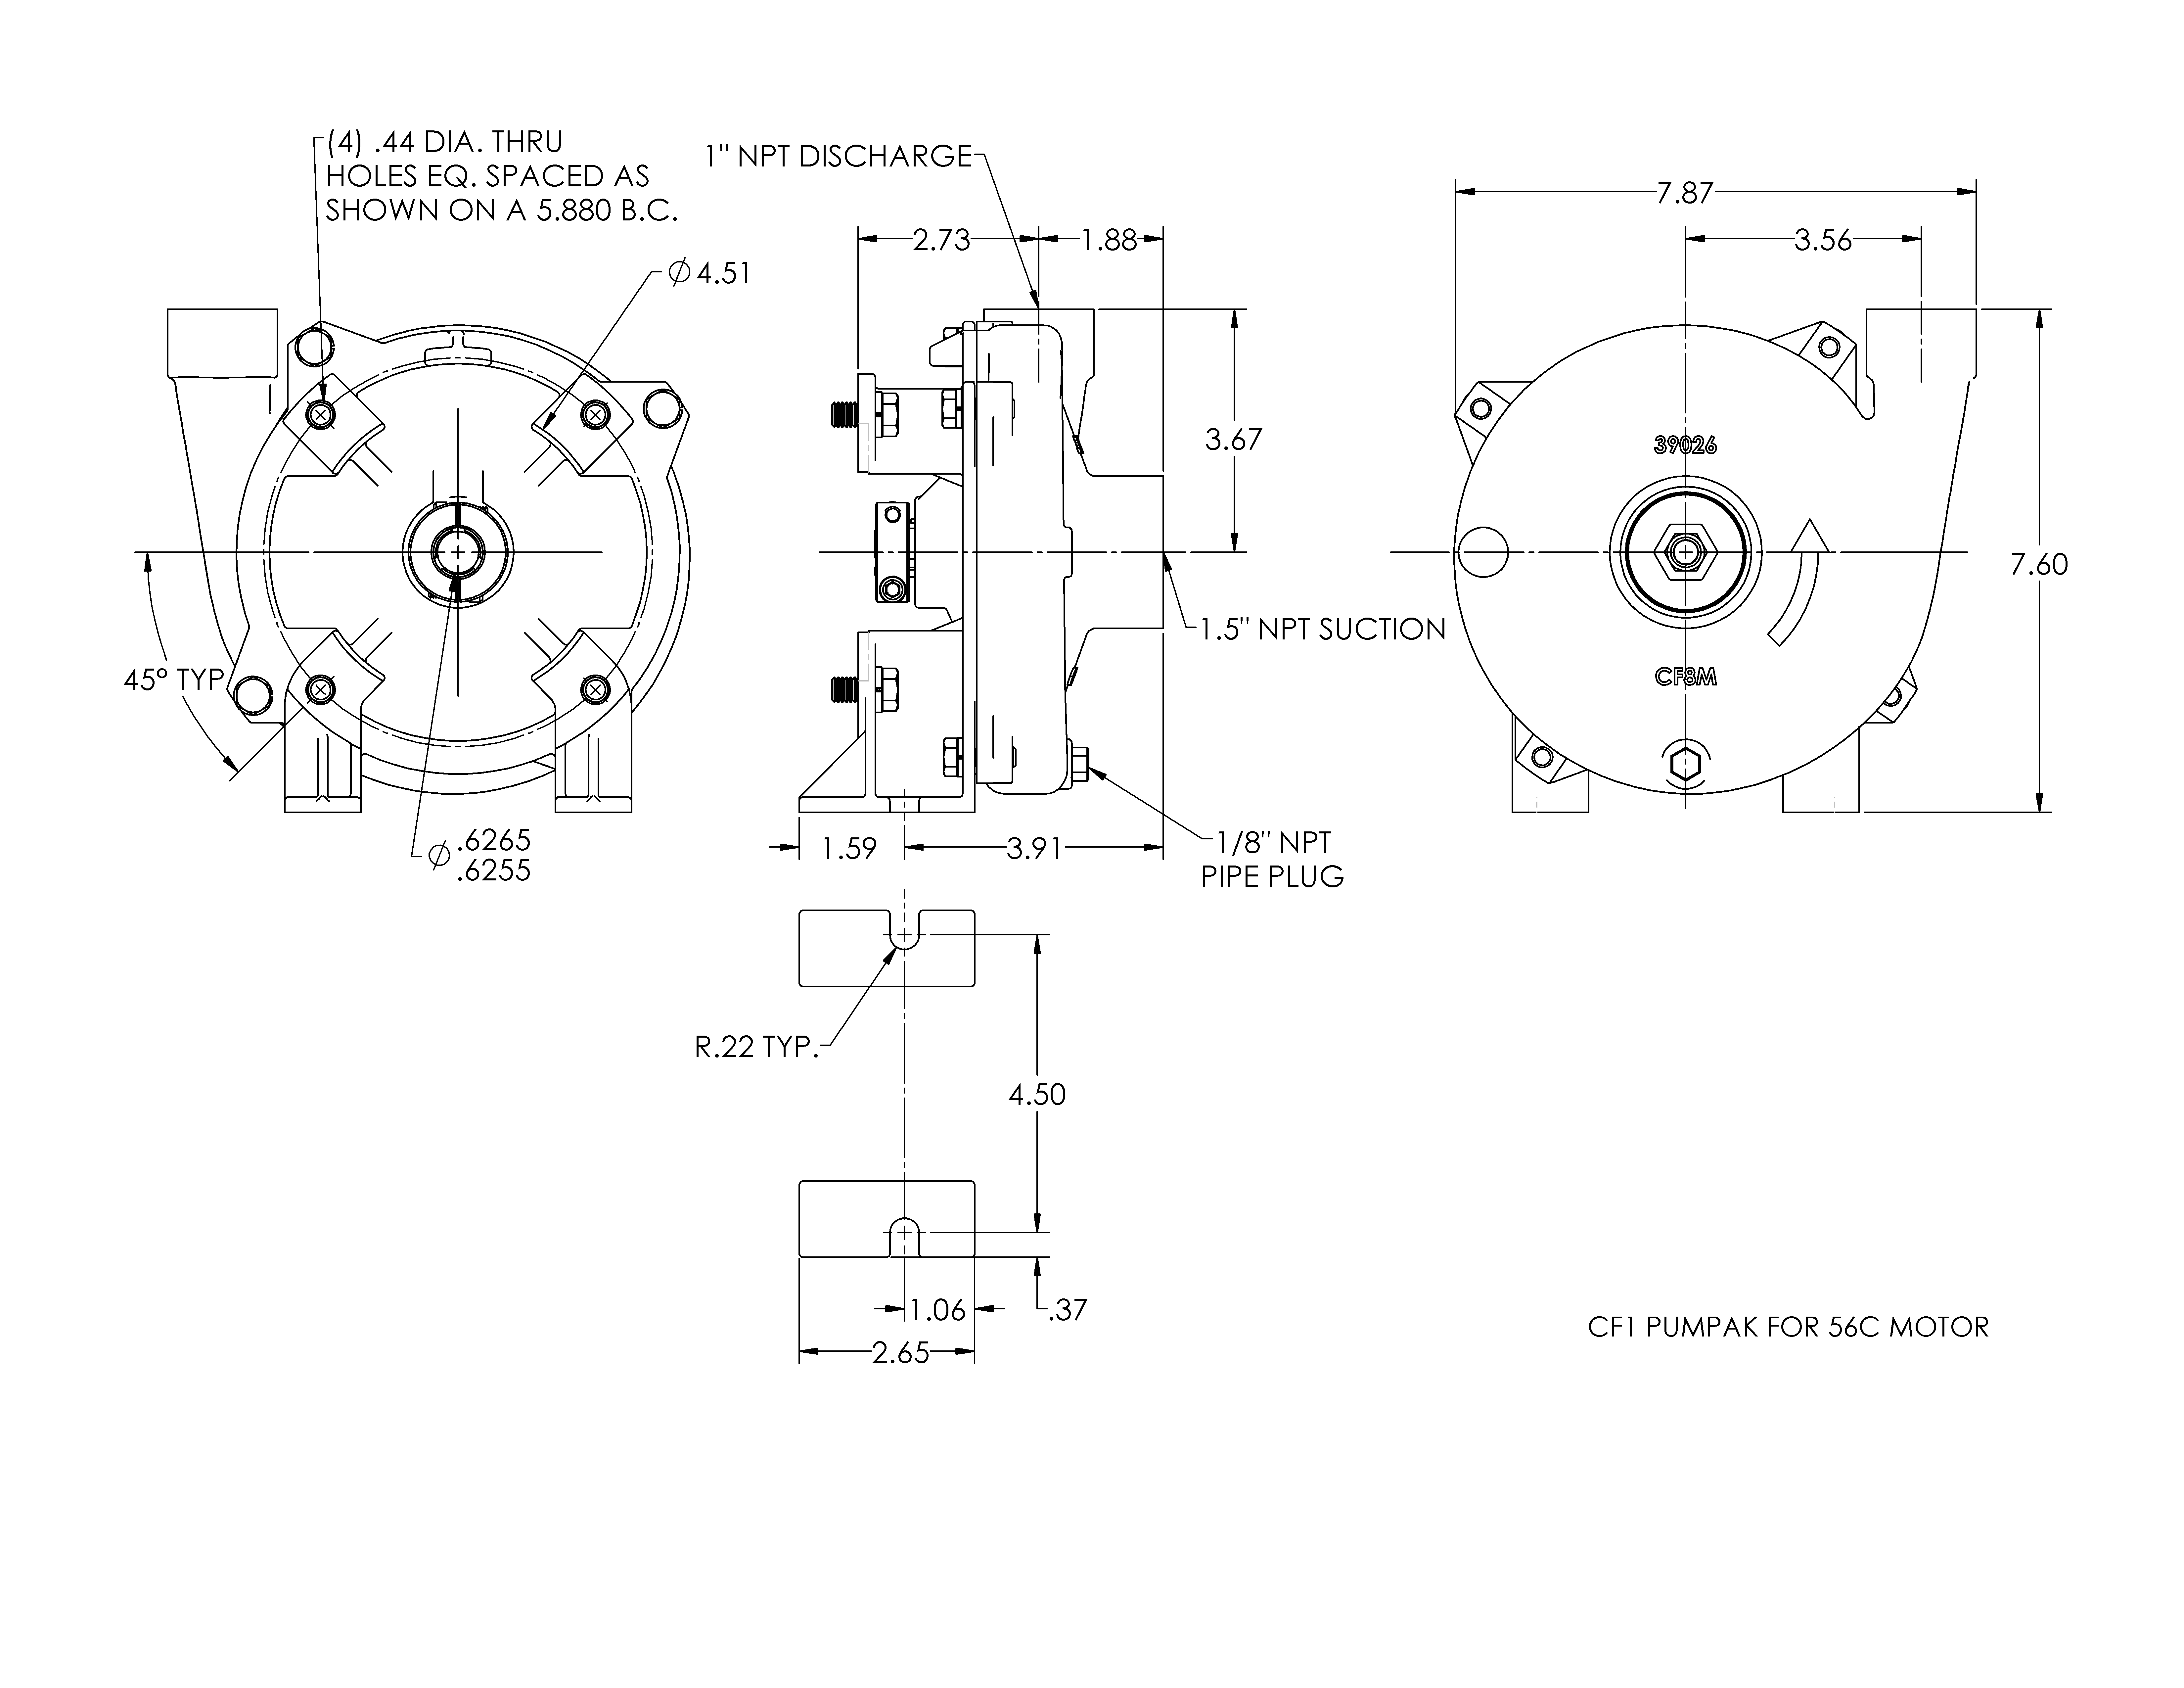 chemflo-1_drawing-cf1-pumppak-for-56c-motor